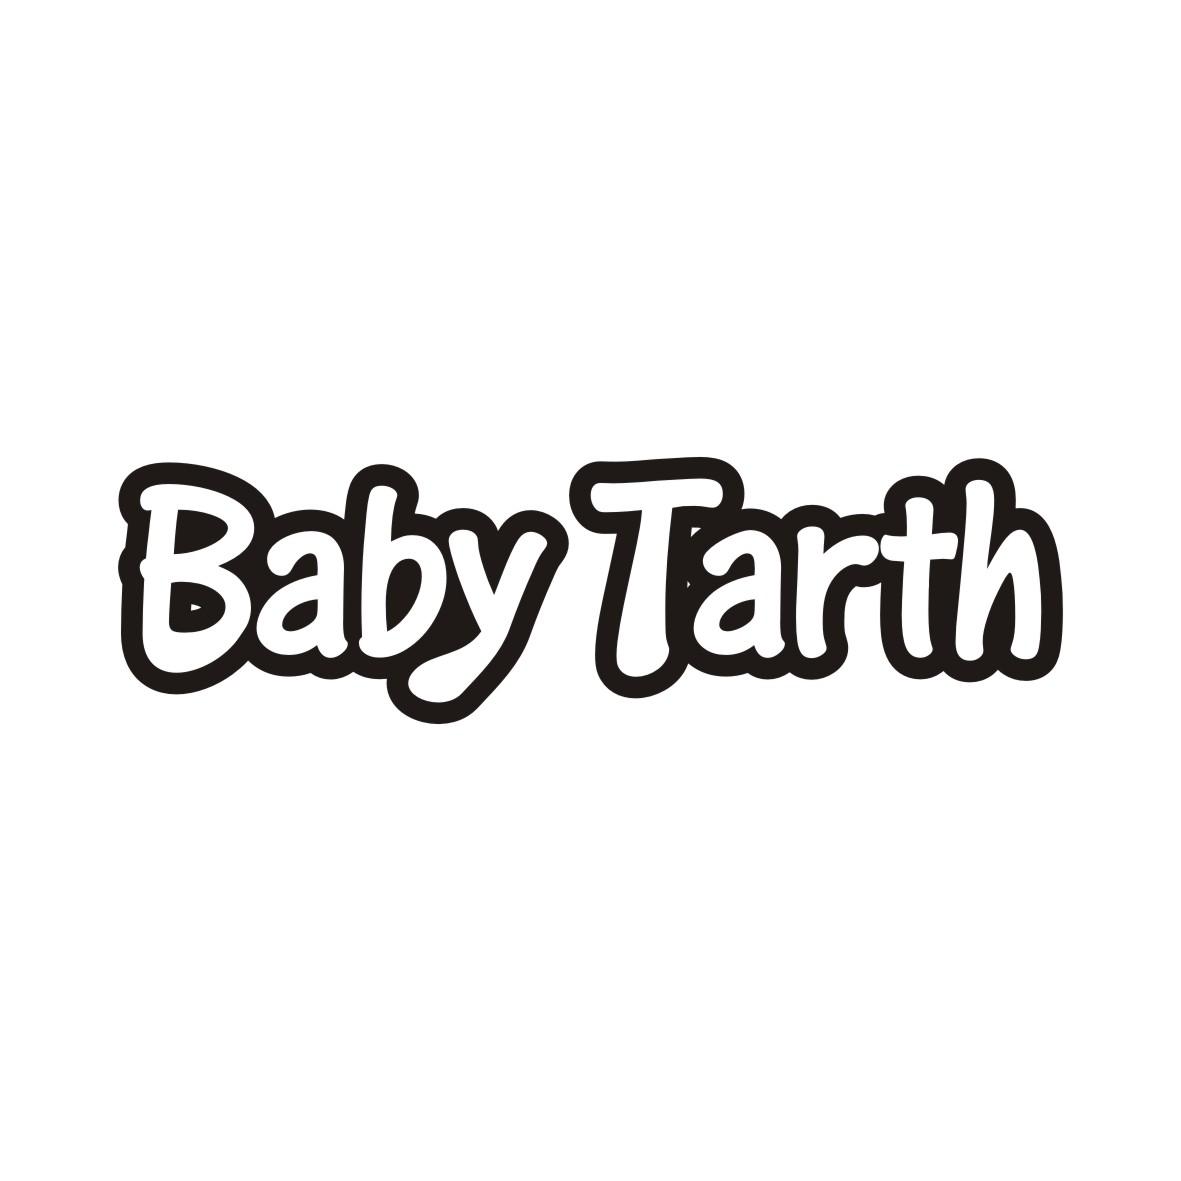 BABY TARTH(塔斯宝宝）织物柔软剂商标转让费用买卖交易流程